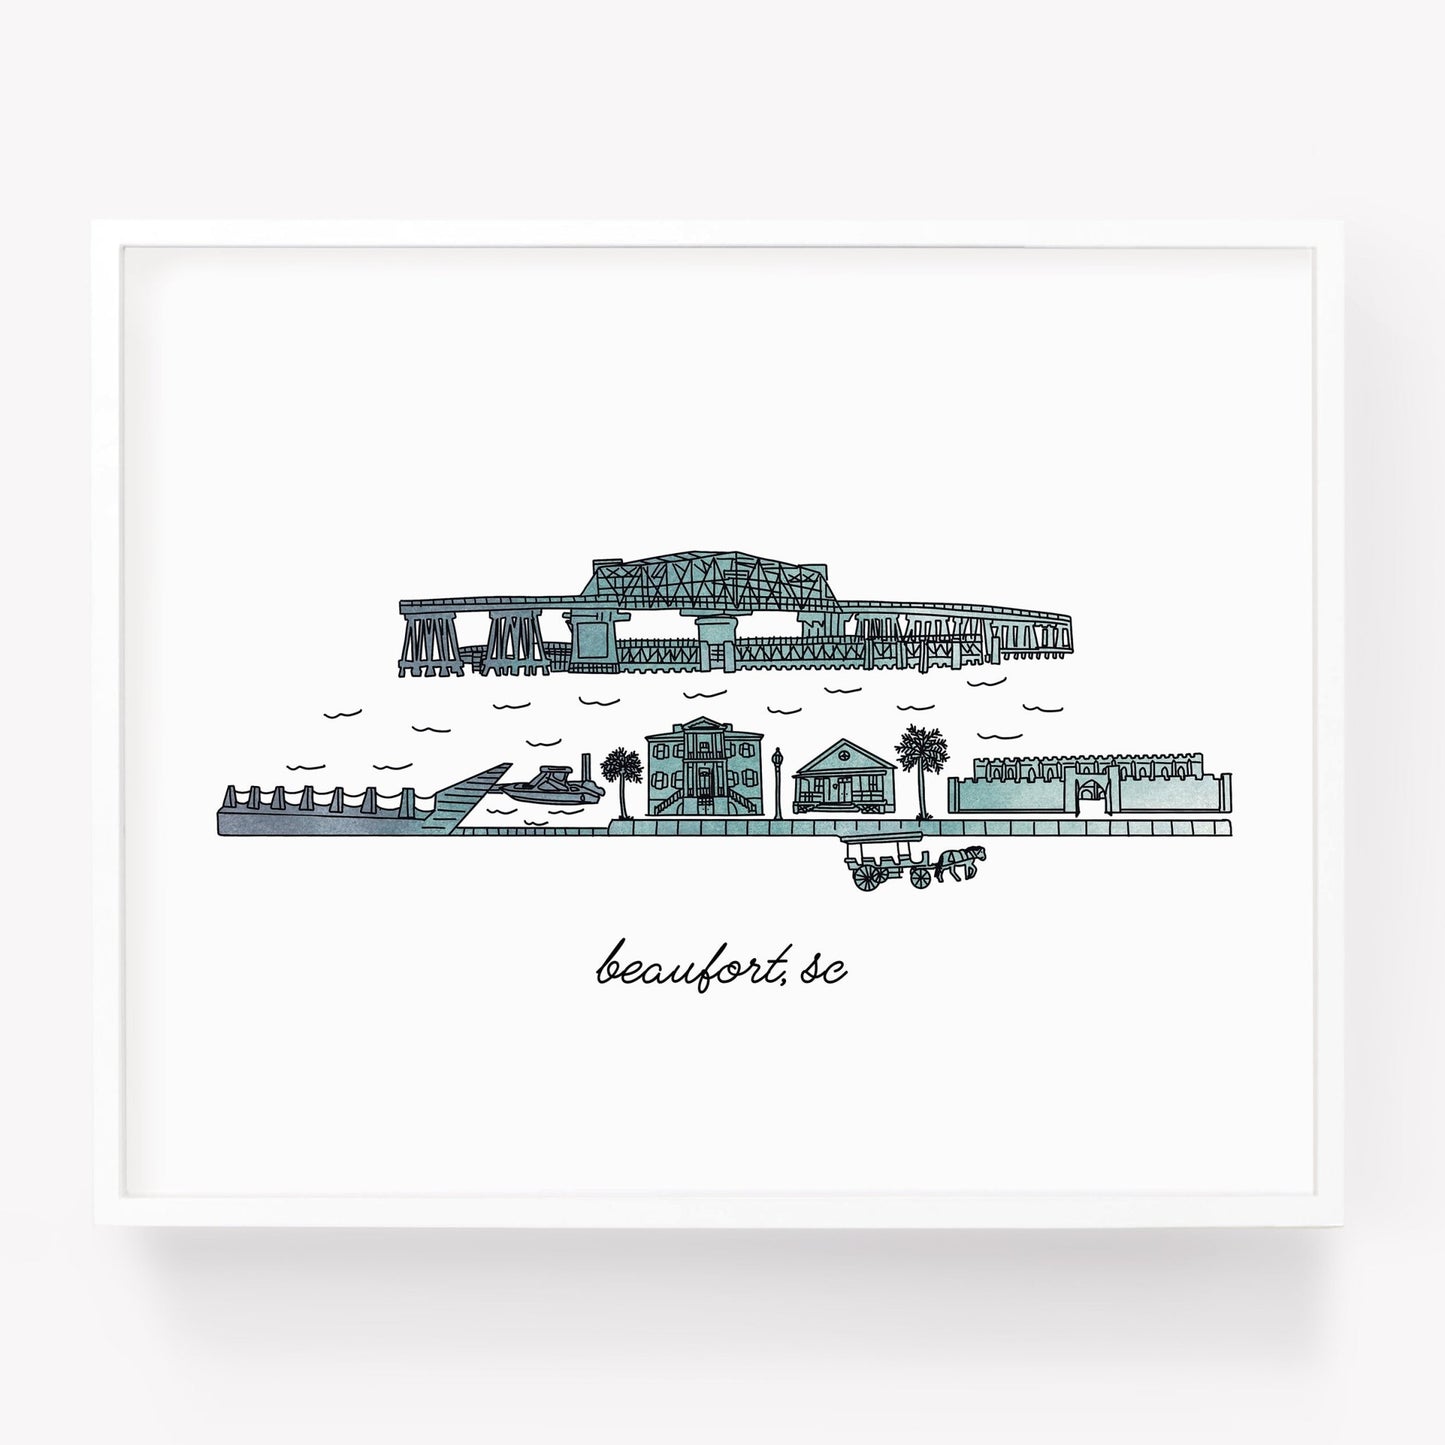 A city art print of a skyline drawing of Beaufort South Carolina - Sparks House Co